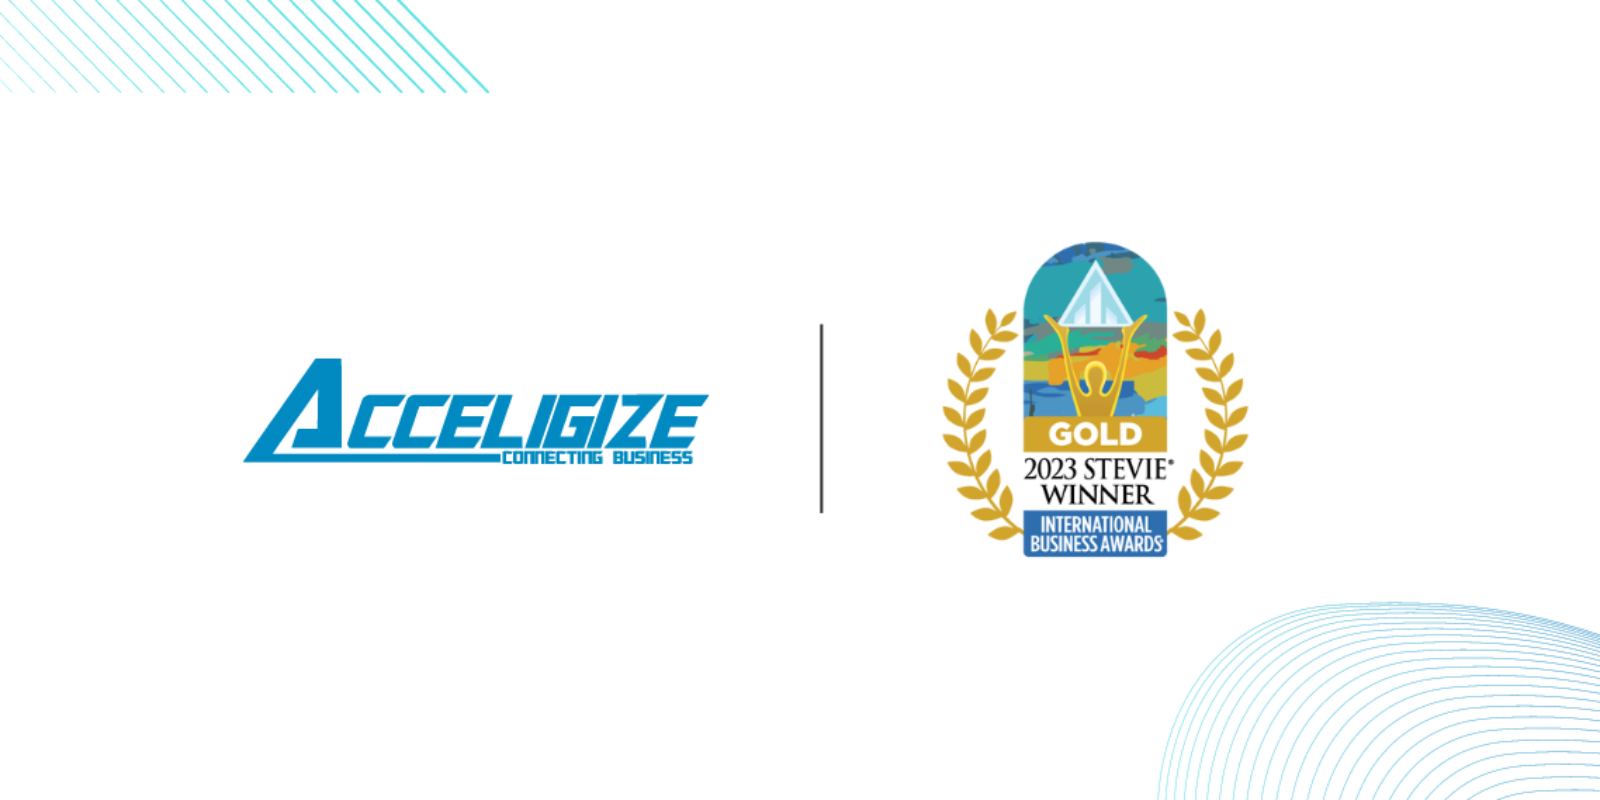 ACCELIGIZE WINS GOLD STEVIE® AWARD IN 2023 INTERNATIONAL BUSINESS AWARDS®